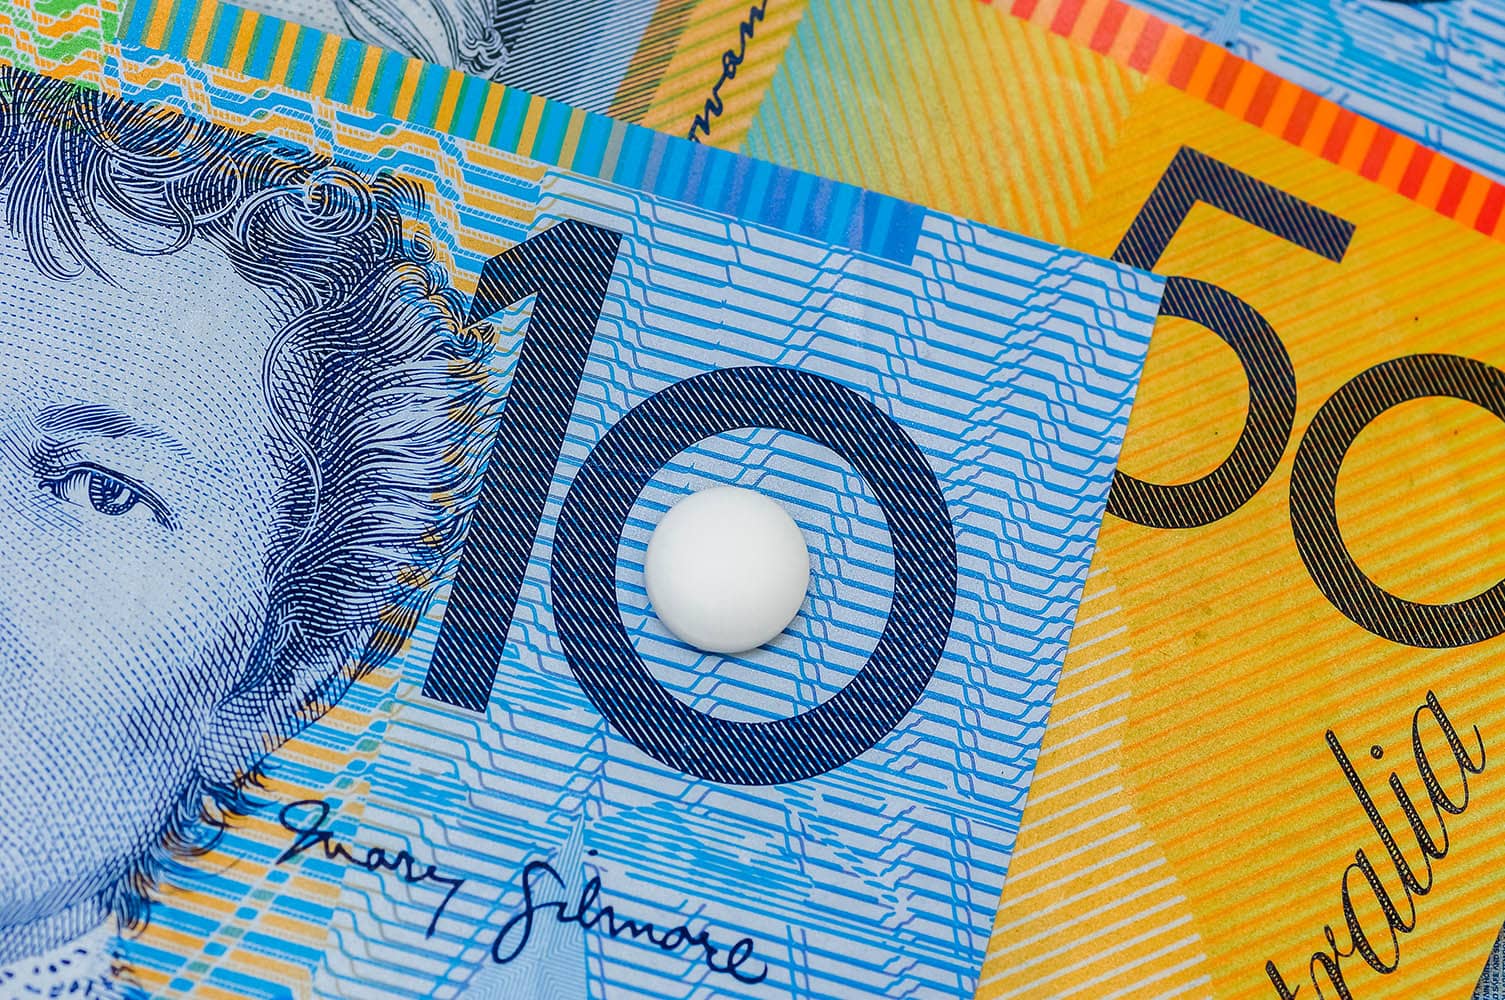 Astrolabe Magnetisk Vind Australian Dollar has Scope to Fall Further: Rabobank